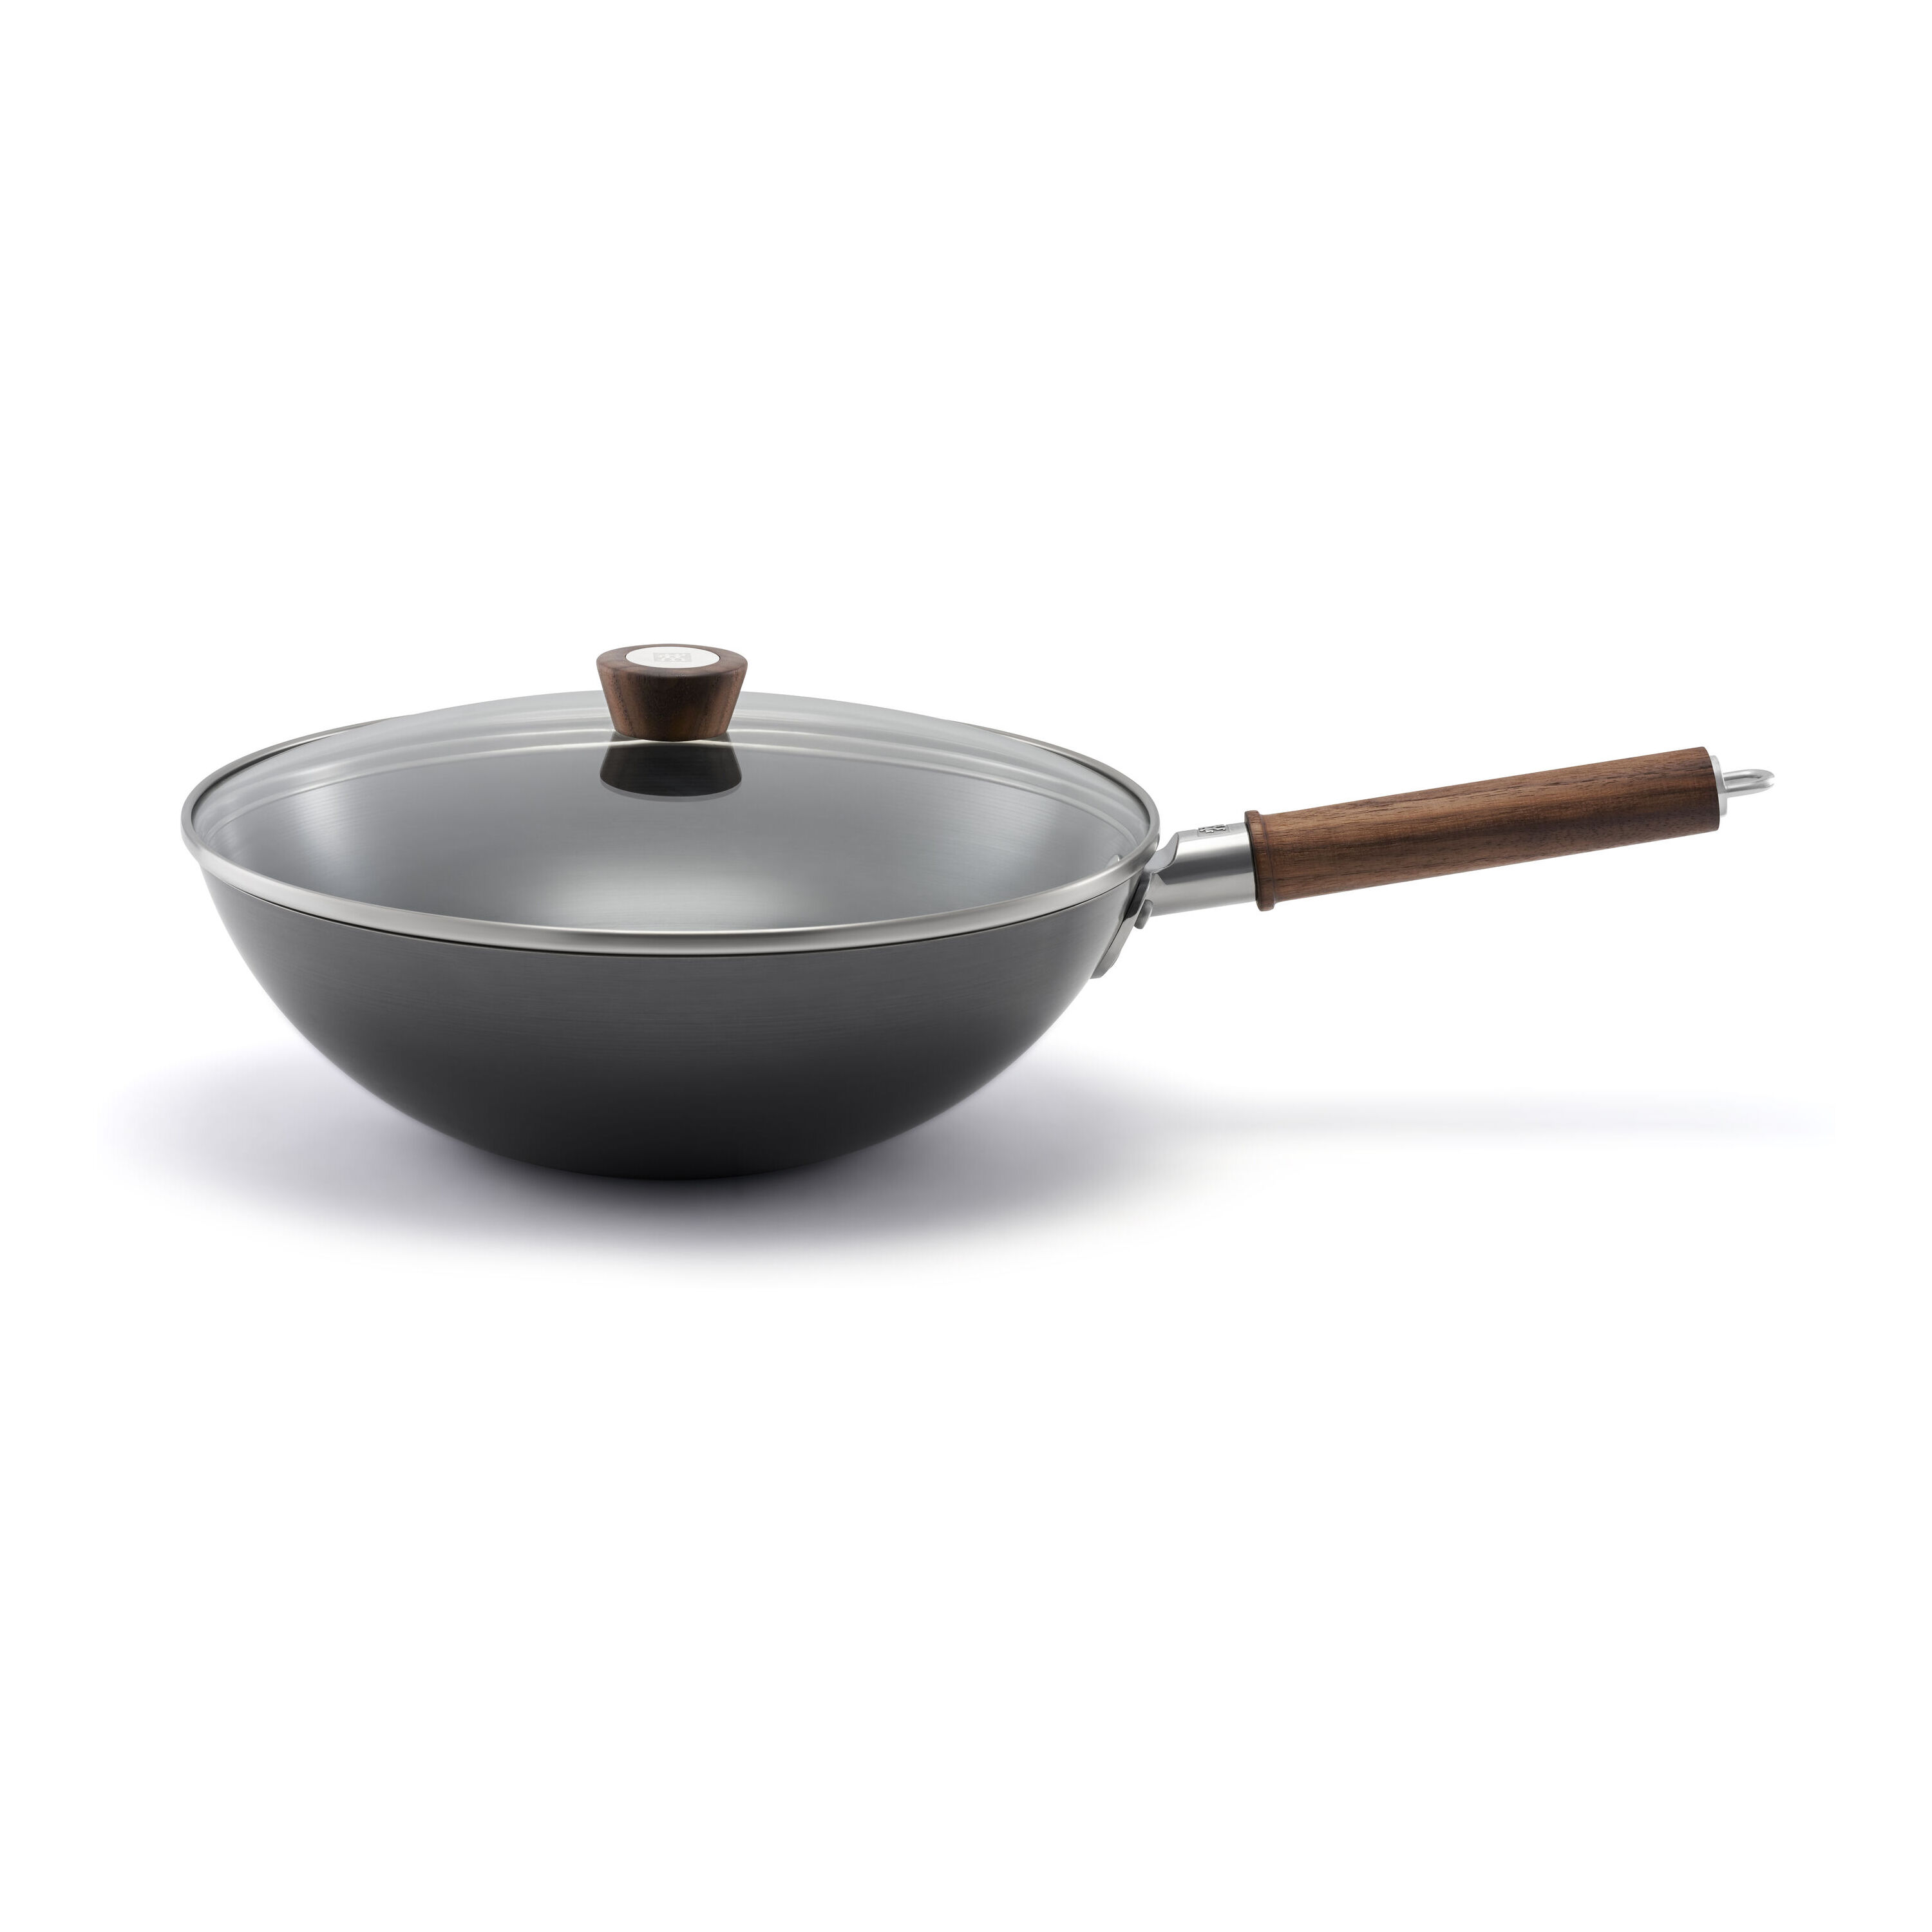 wok, 12 flat bottom carbon steel WAIT - Whisk